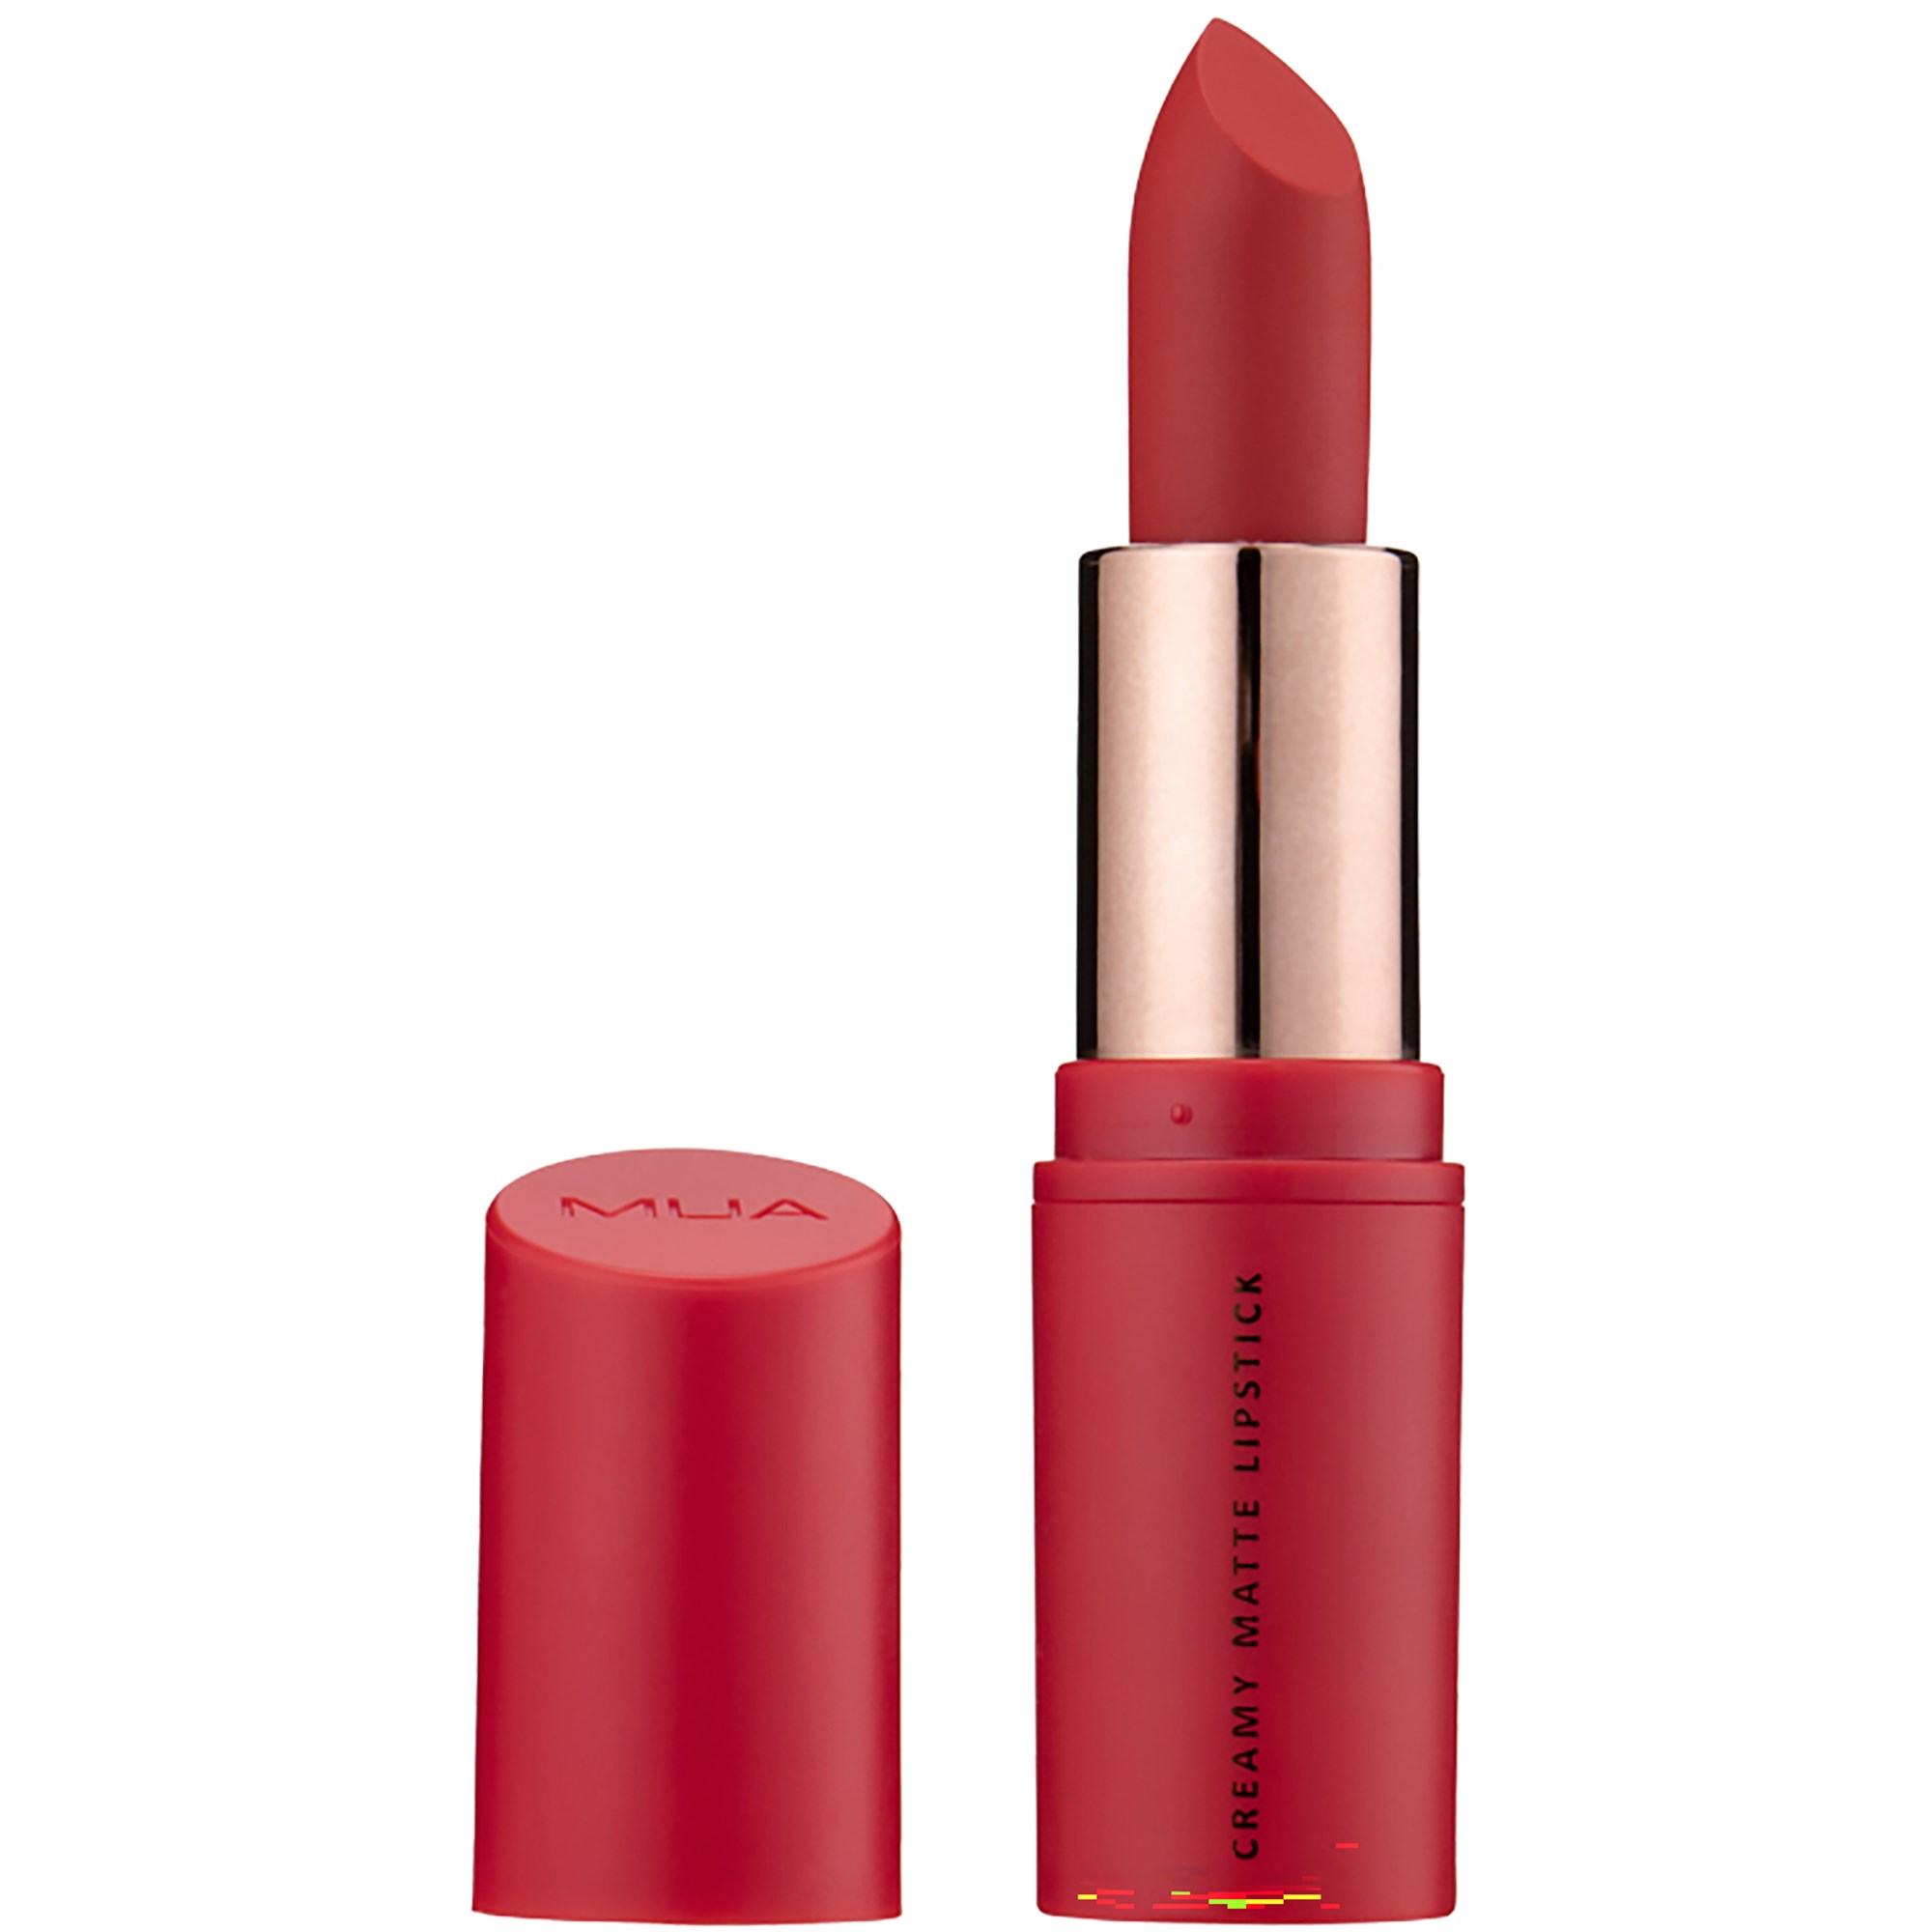 Läs mer om Makeup Academy Creamy Matte Lipstick Razzleberry